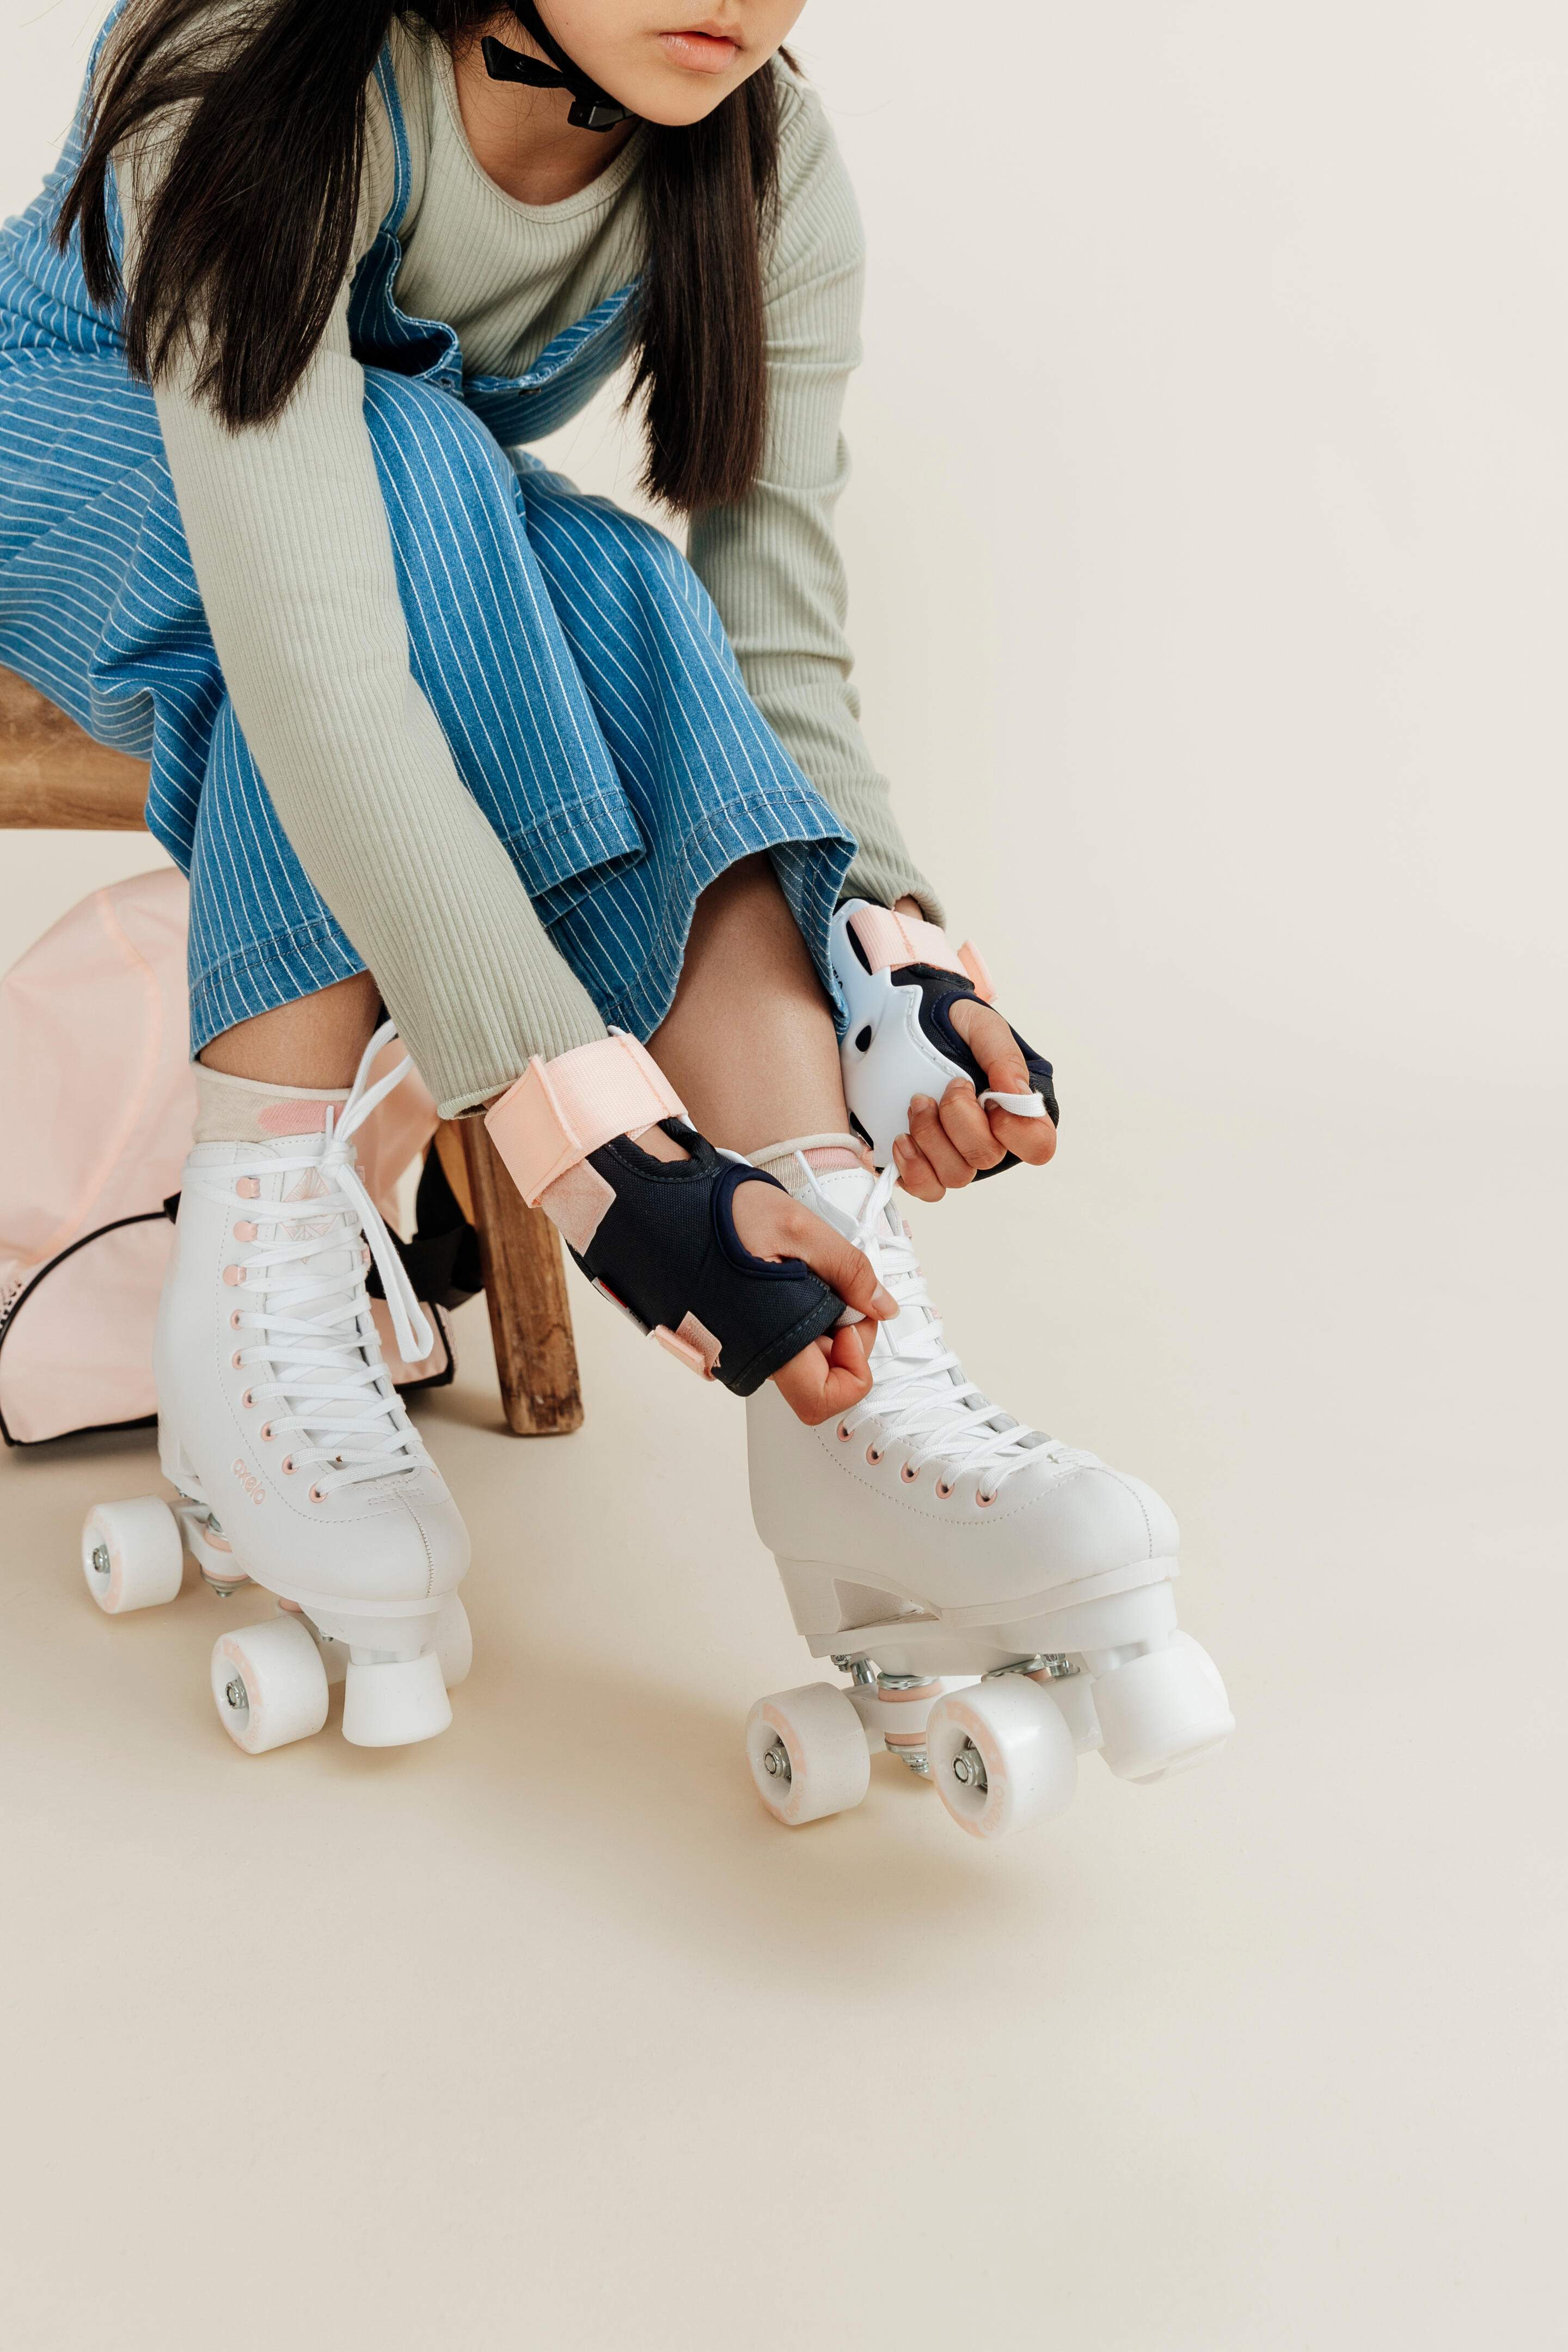 Kids' and Adult Artistic Roller Skating Quad Skates 100 - White 12/16